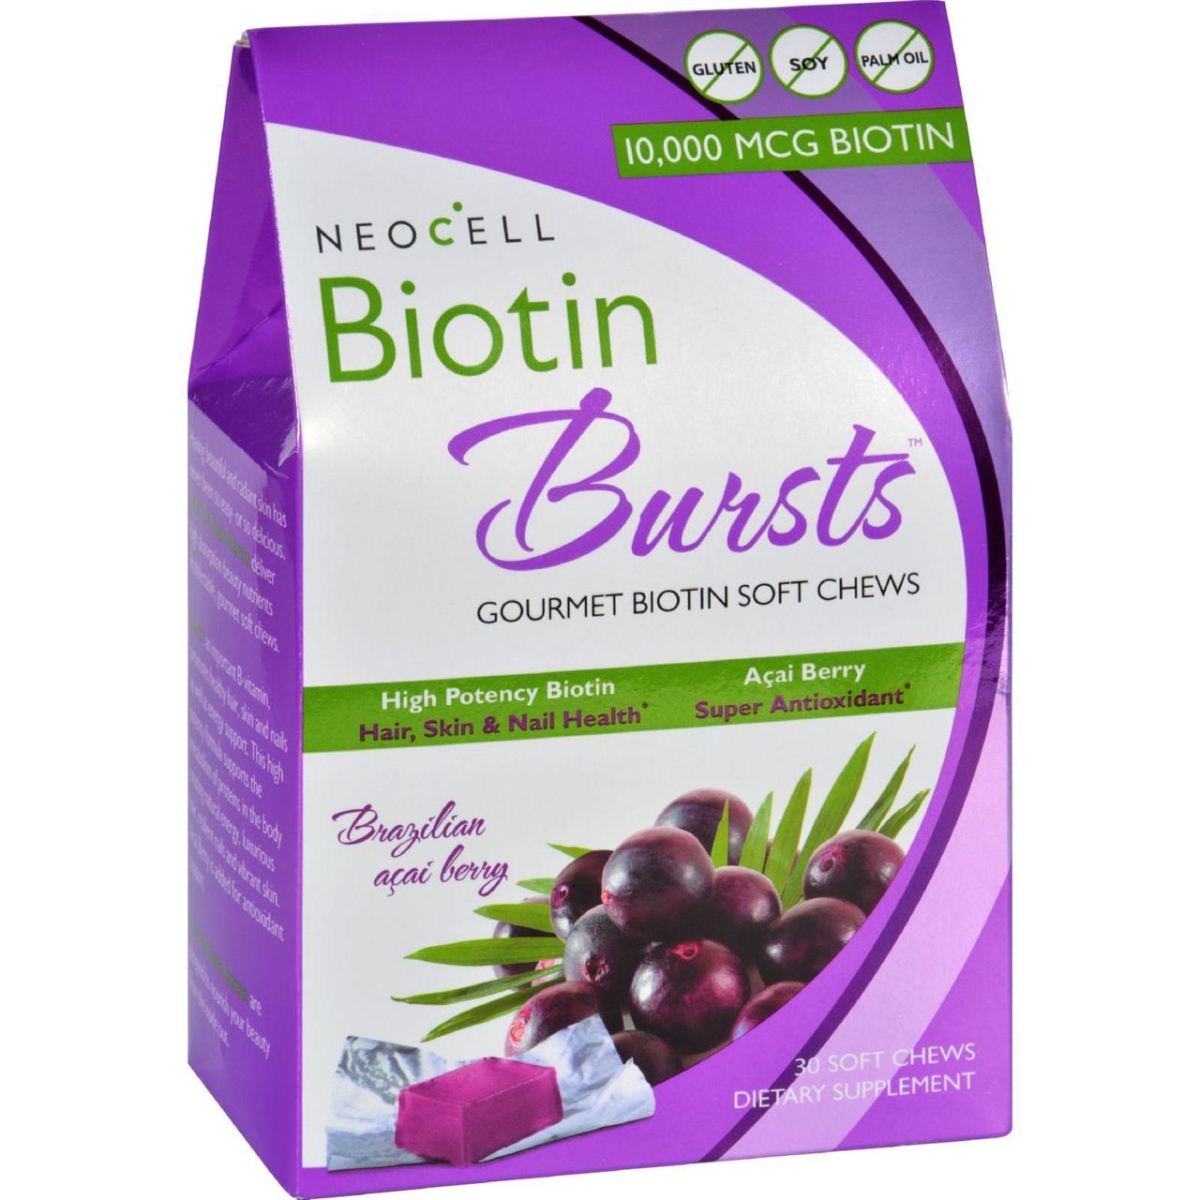 Hg1560515 Biotin Bursts Chewable Acai Berry - 30 Count